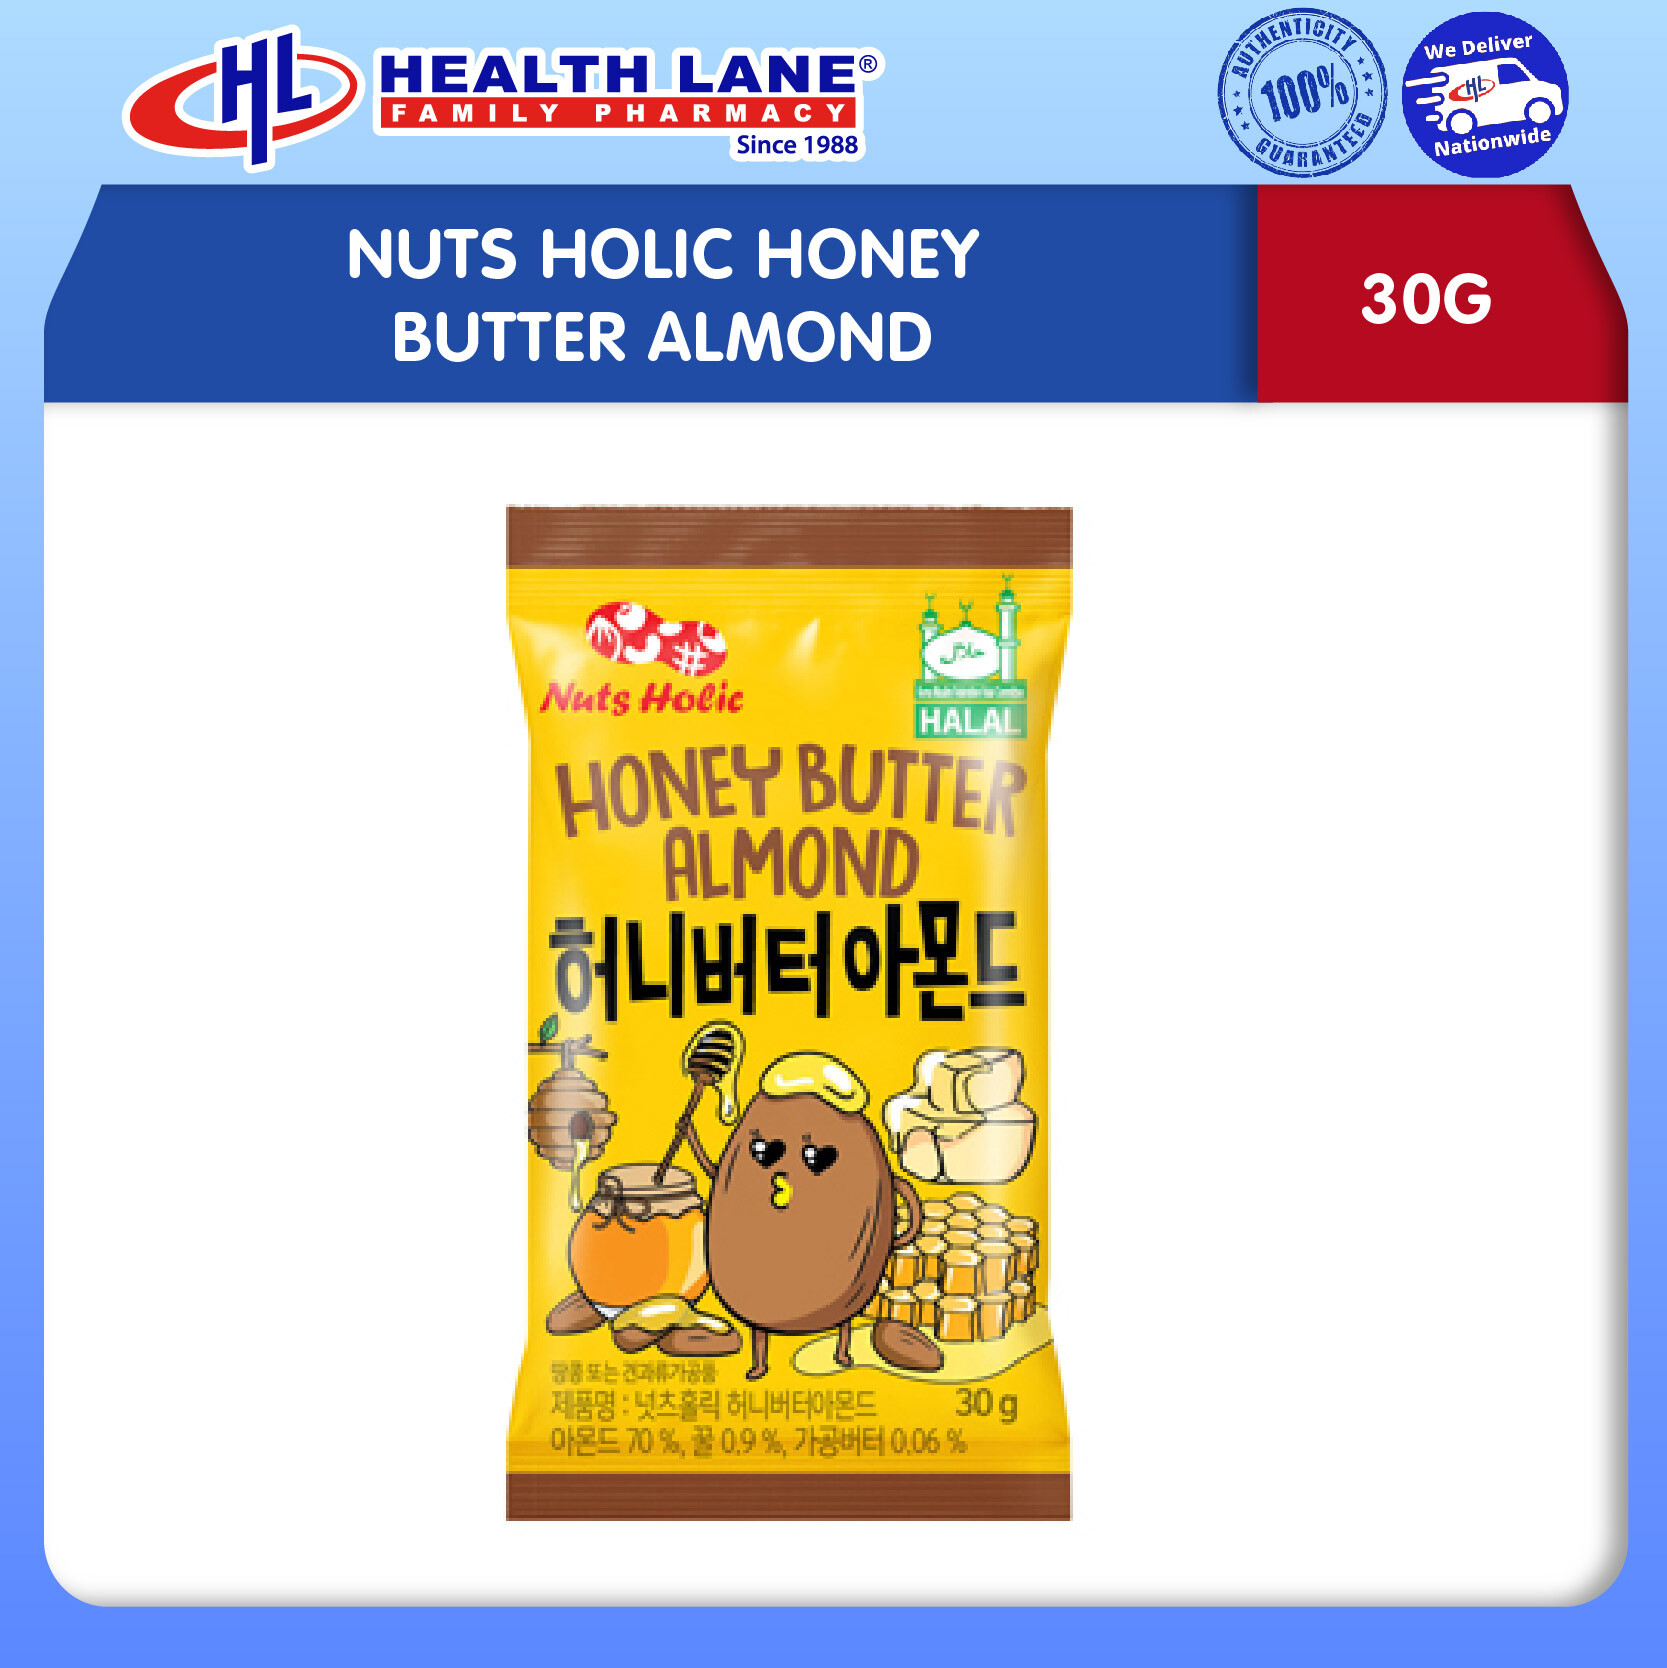 NUTS HOLIC HONEY BUTTER ALMOND (30G)